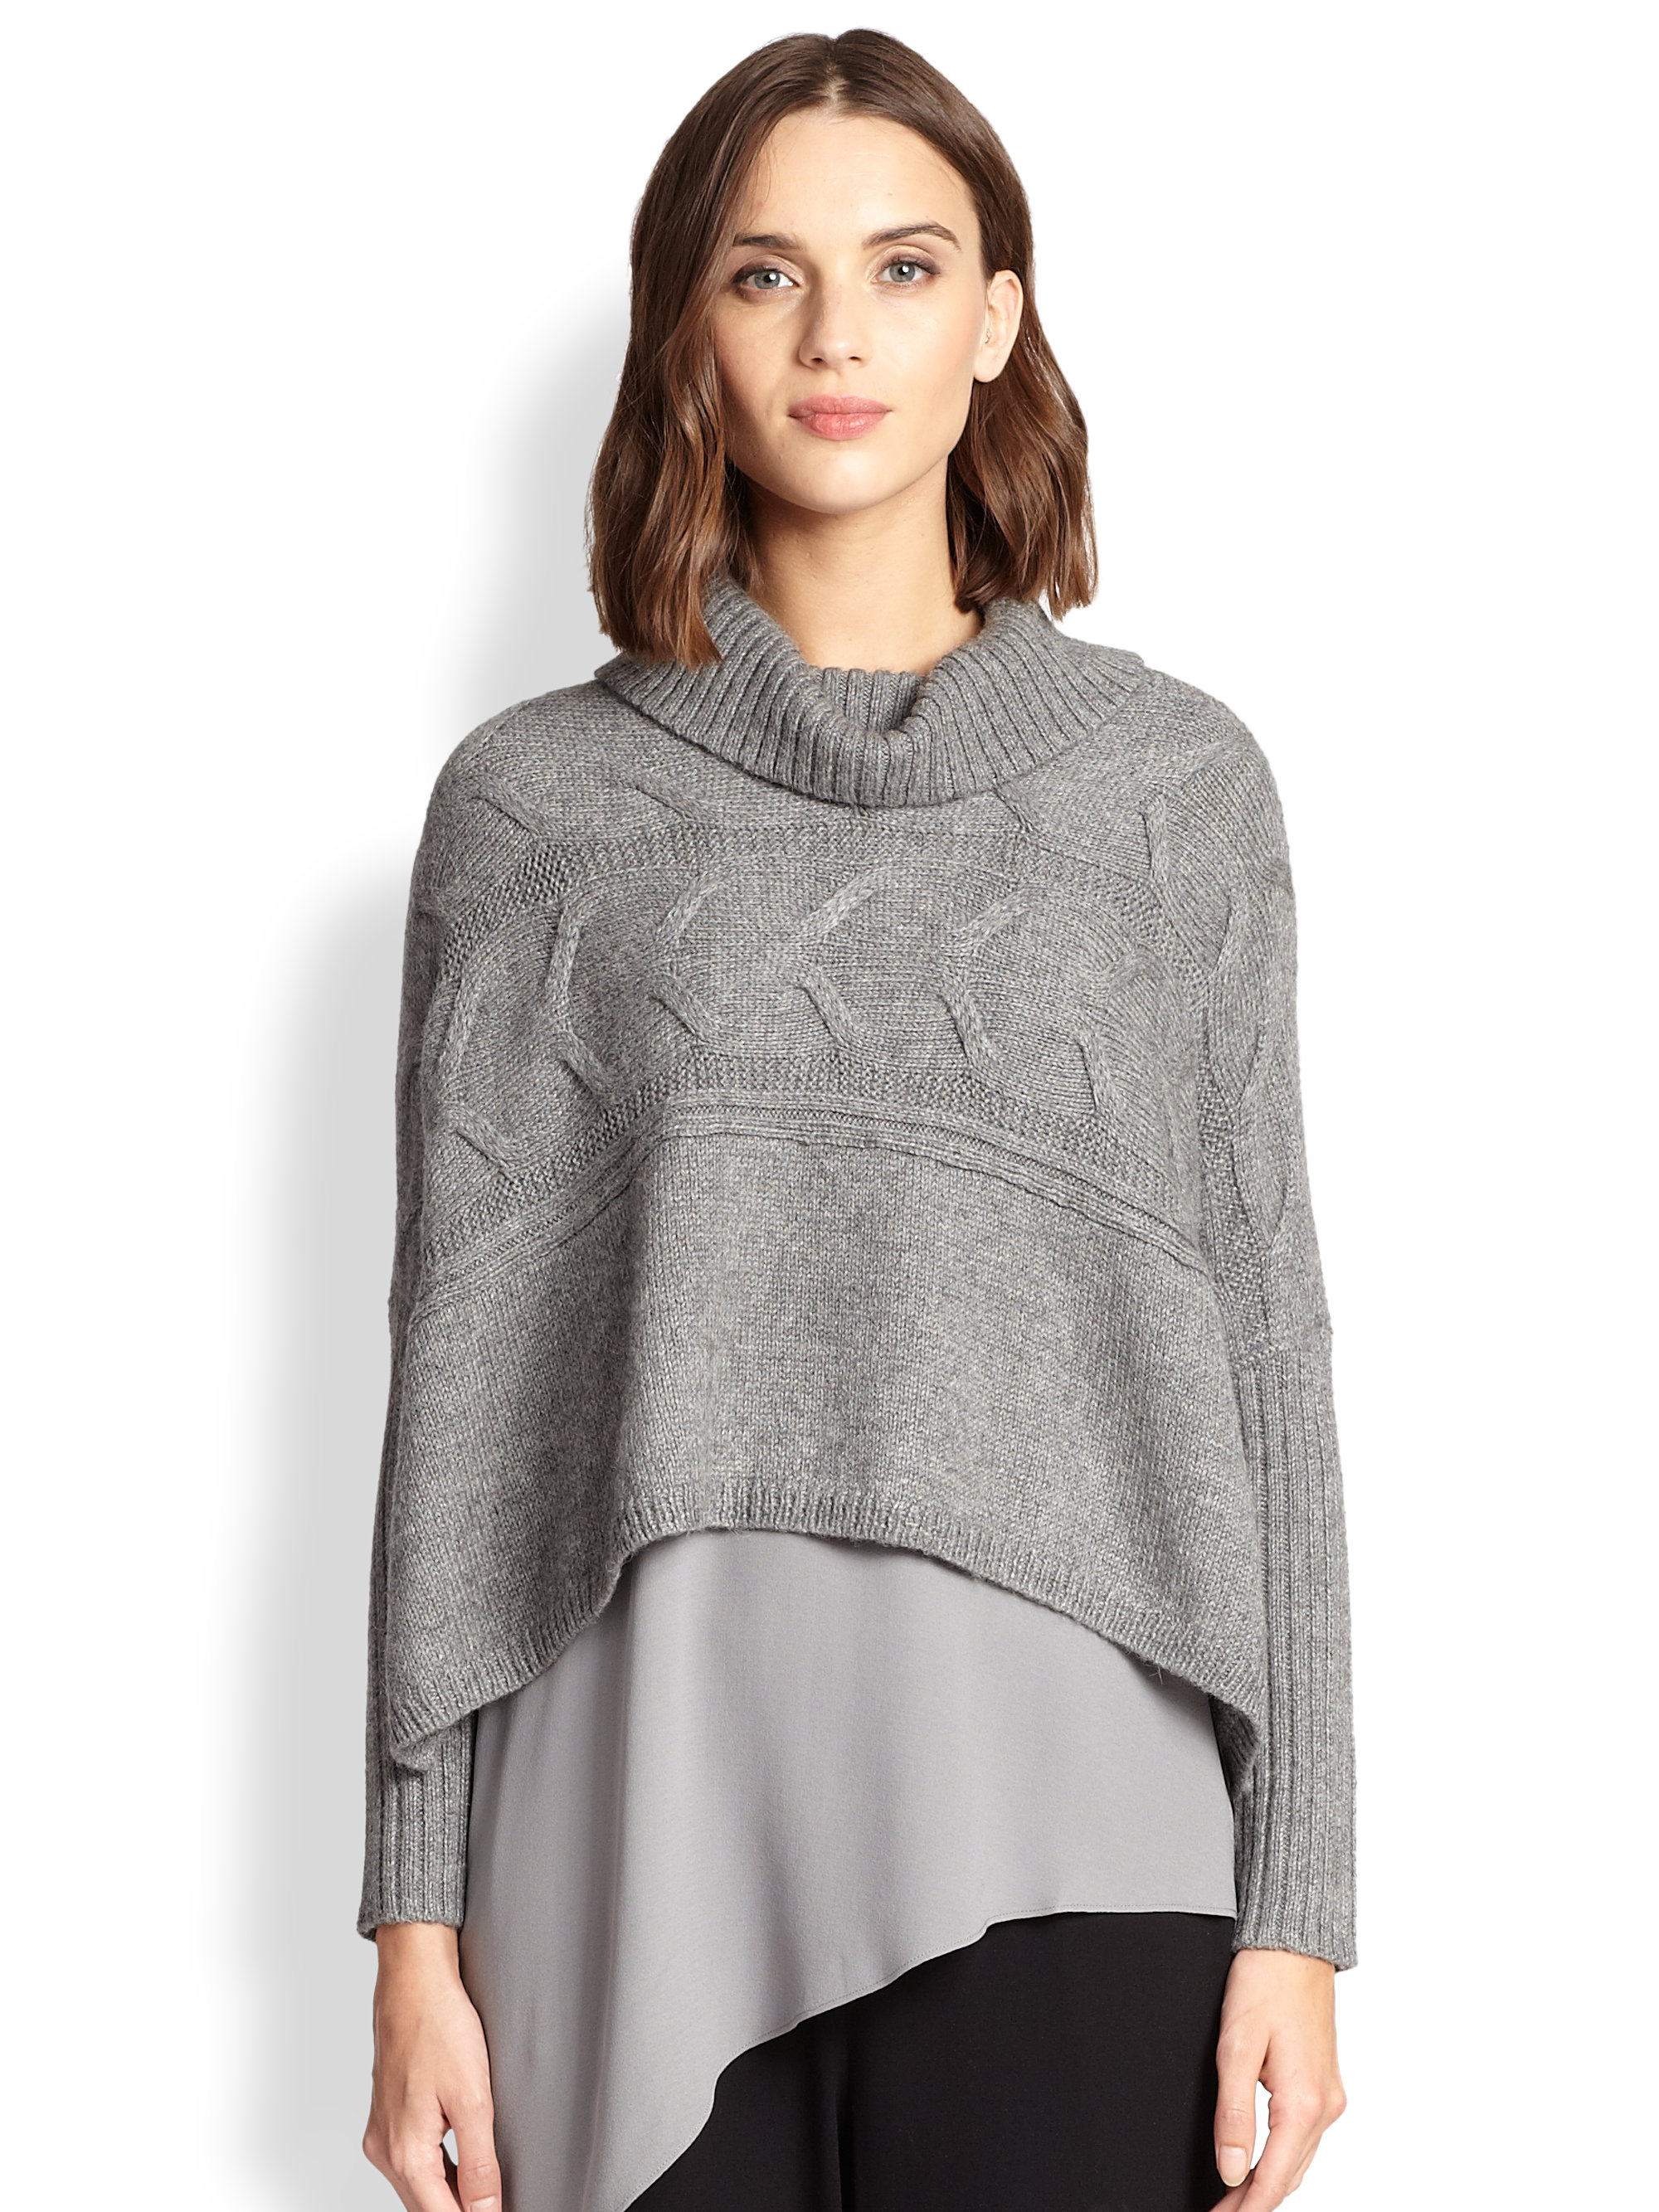 Lyst - Eileen Fisher Alpaca & Silk Poncho Sweater in Gray